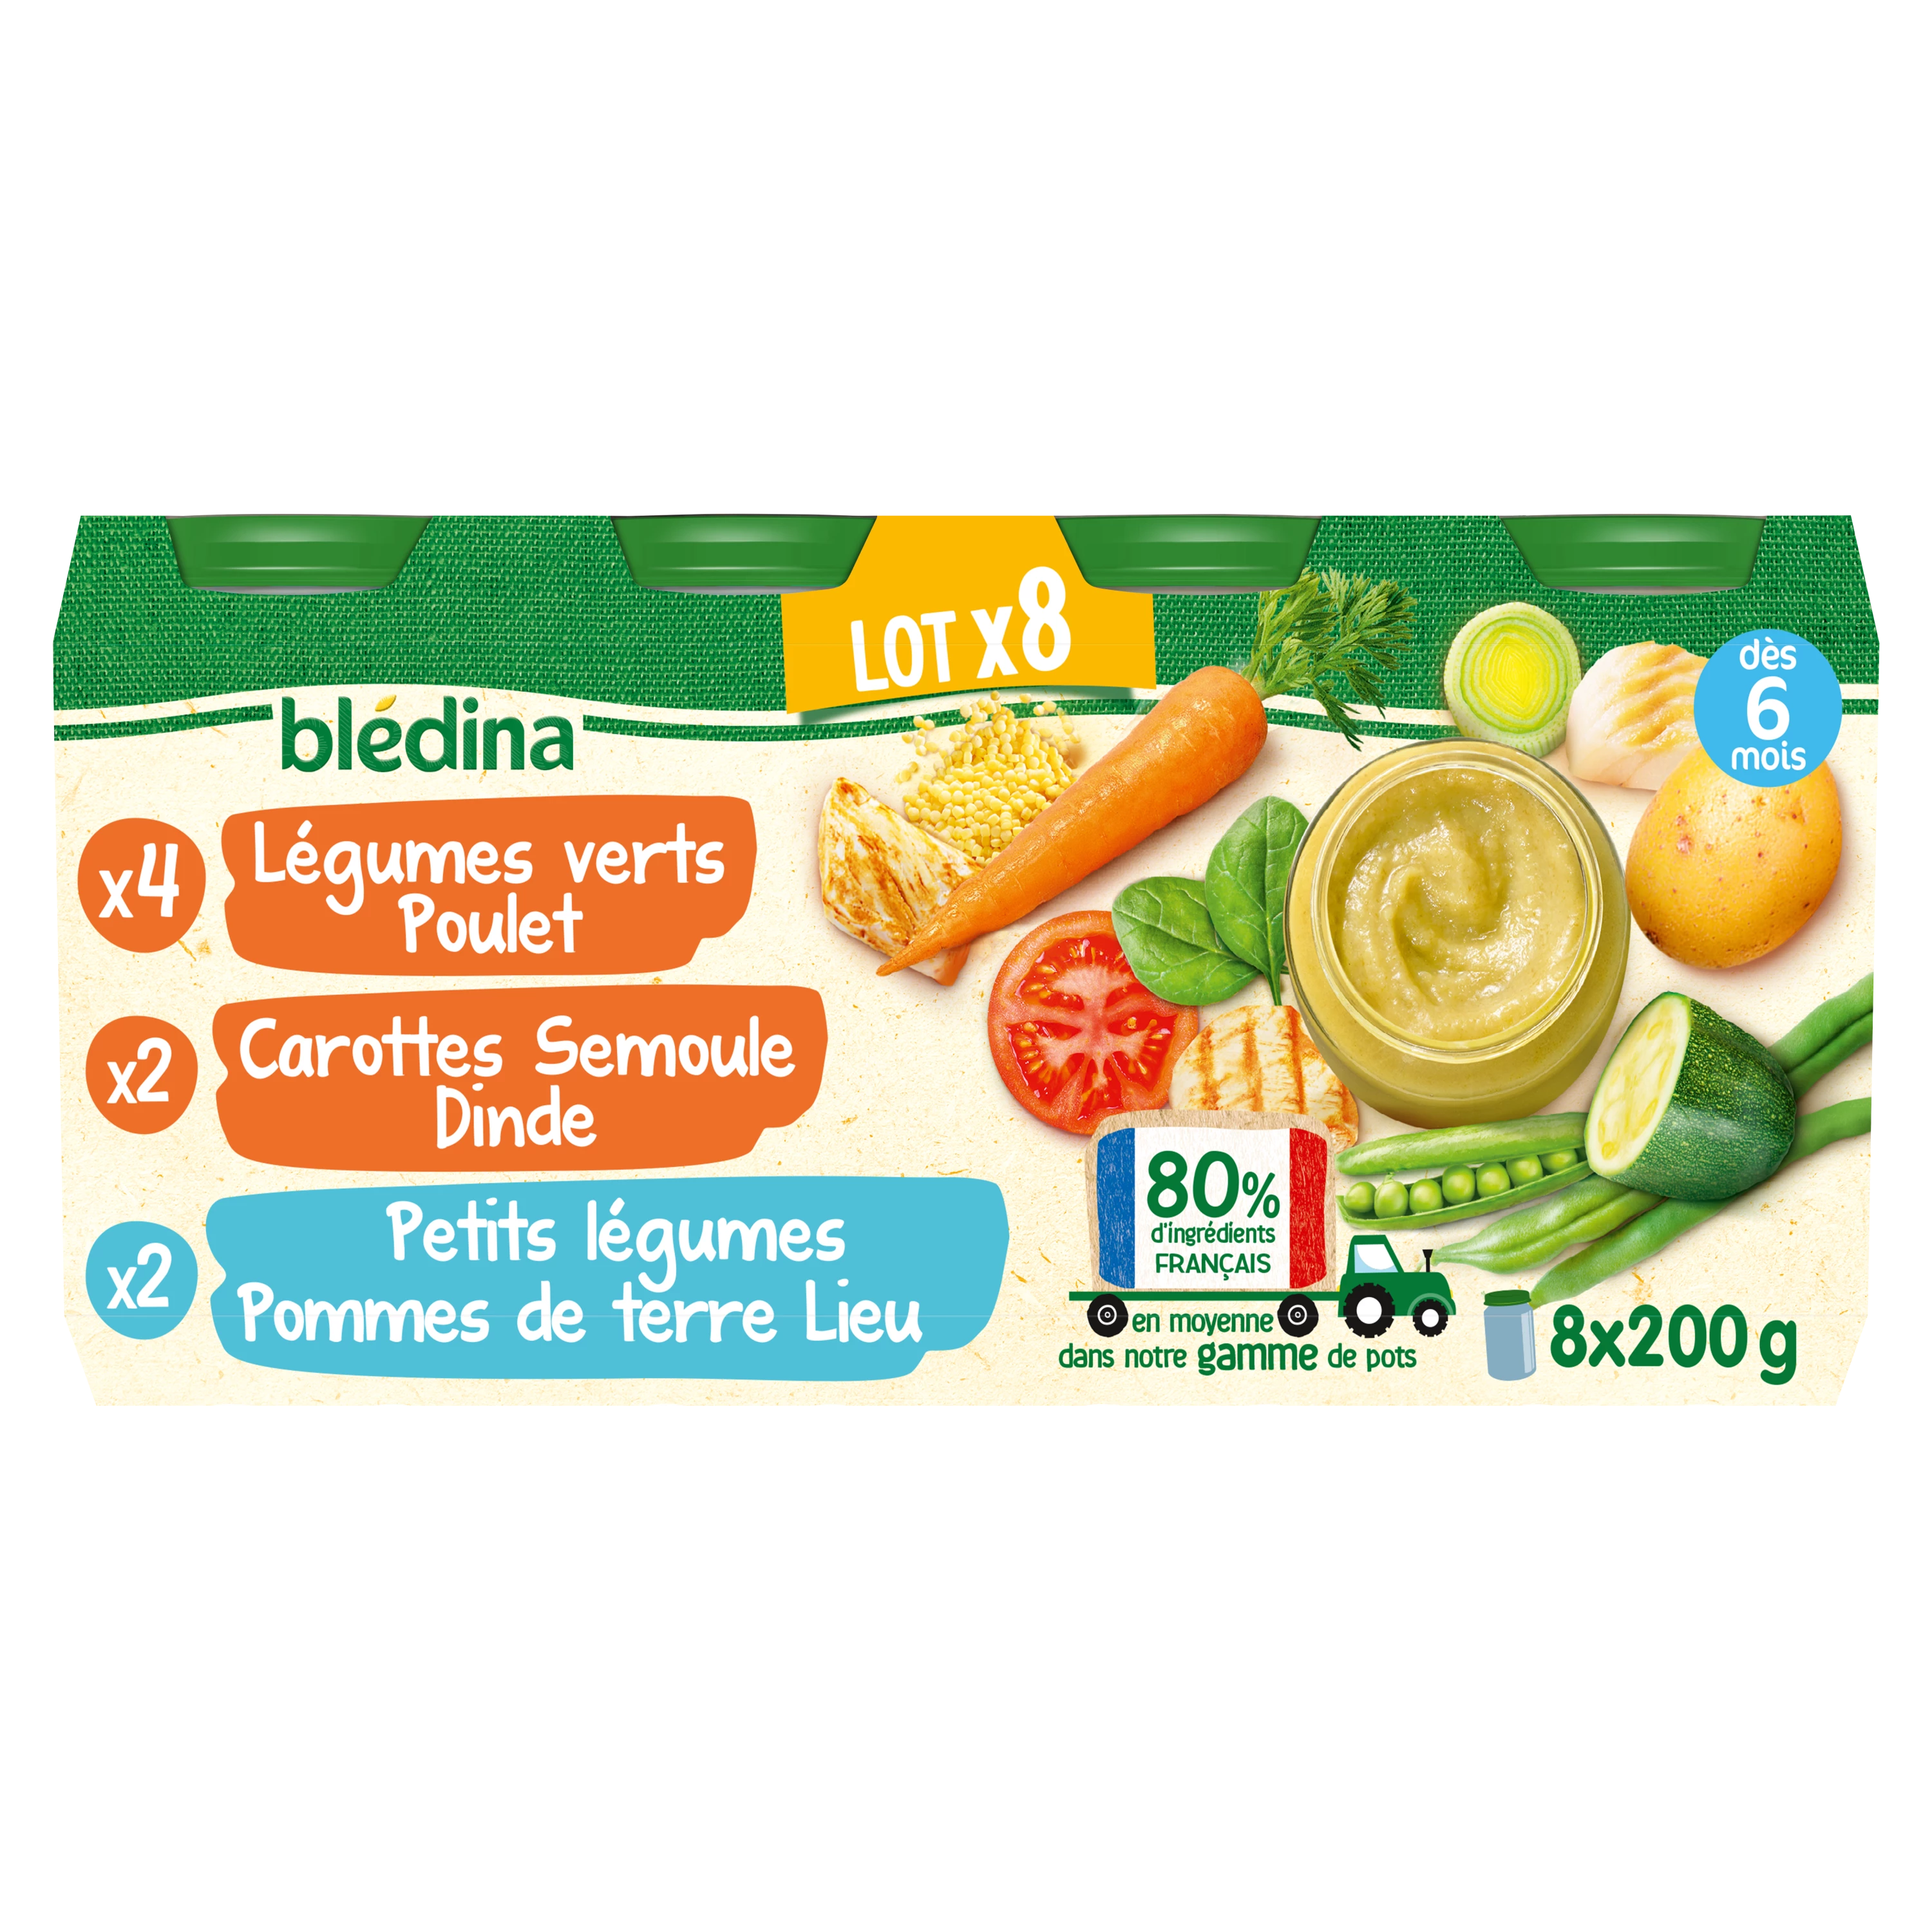 Pentolino piccolo dai 6 mesi verdure verdi pollo, carote semolino tacchino e verdure patate posto 8x200g - BLEDINA